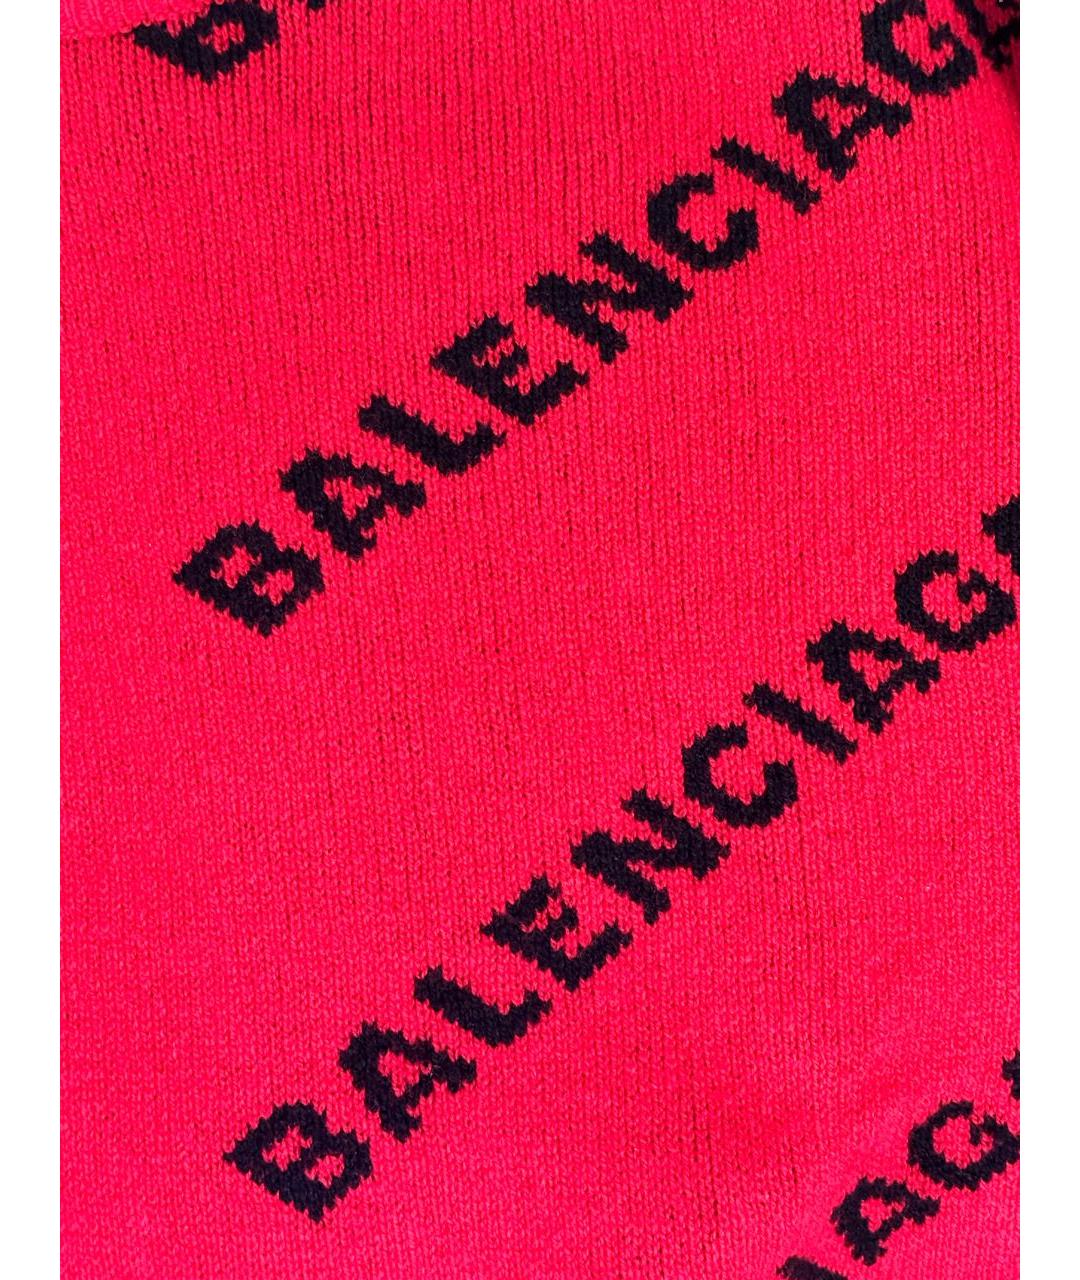 BALENCIAGA Красный шерстяной джемпер / свитер, фото 4